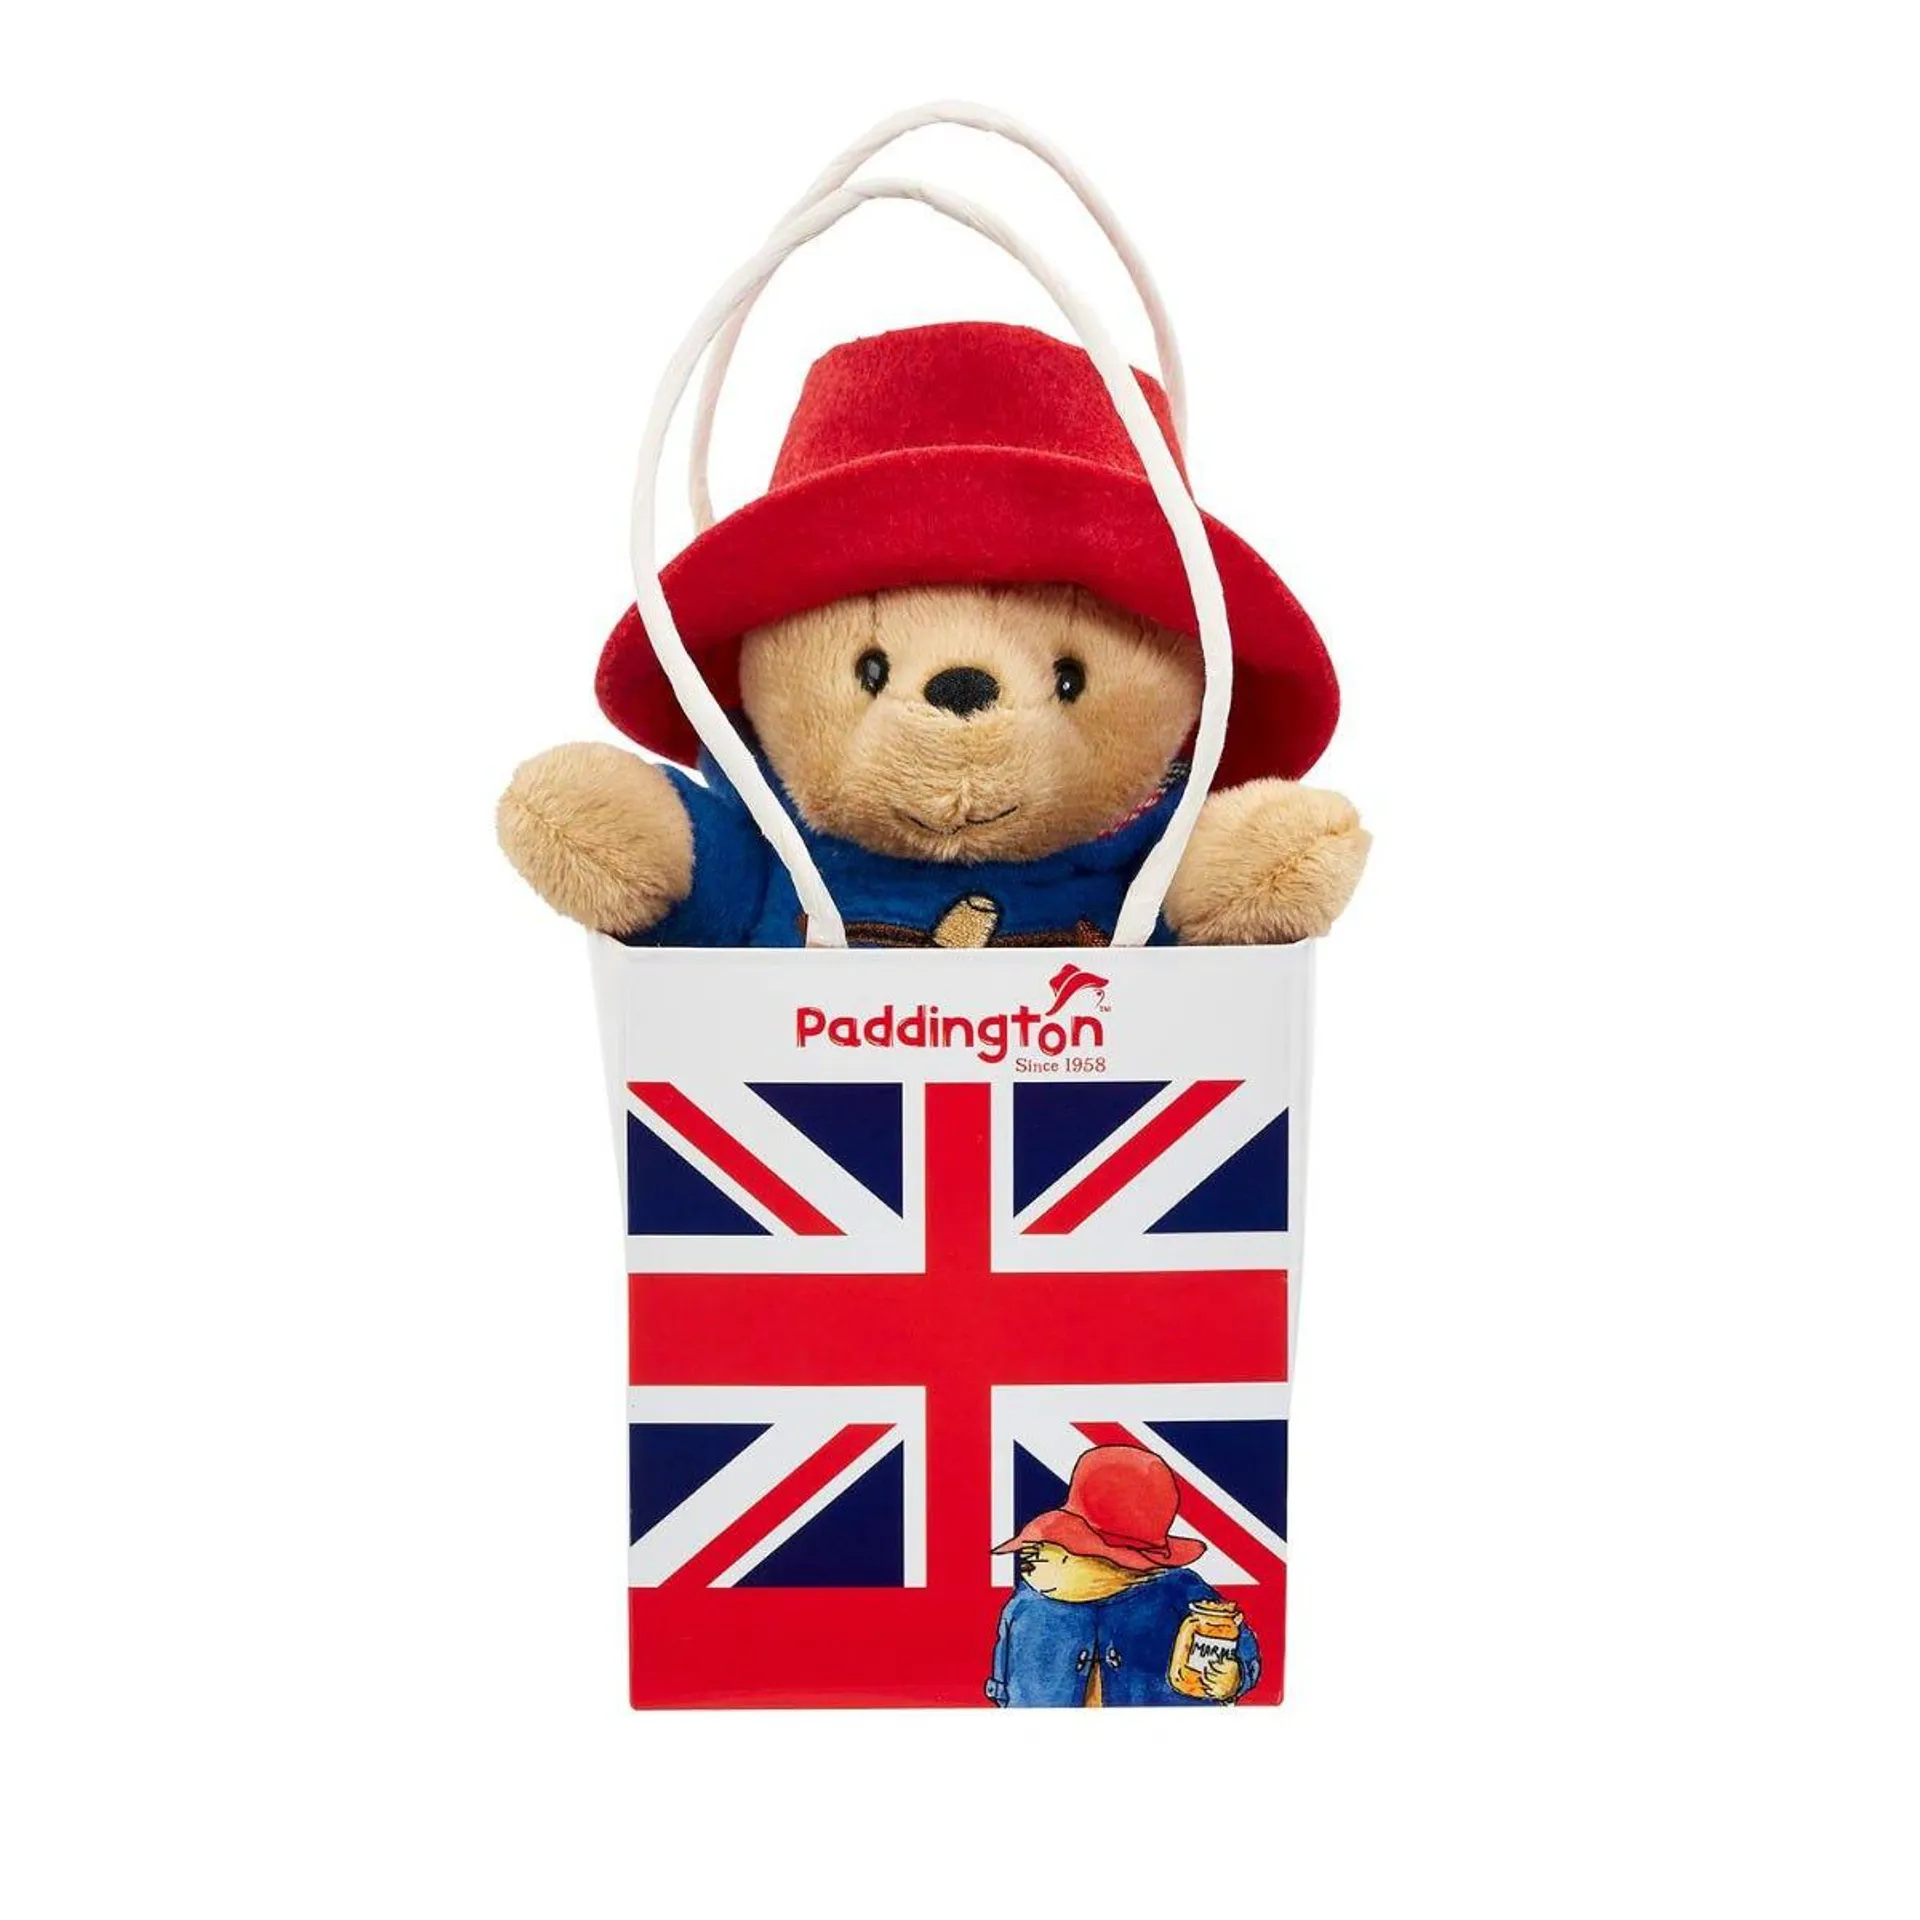 Paddington Bear Classic Soft Toy in Union Jack Bag